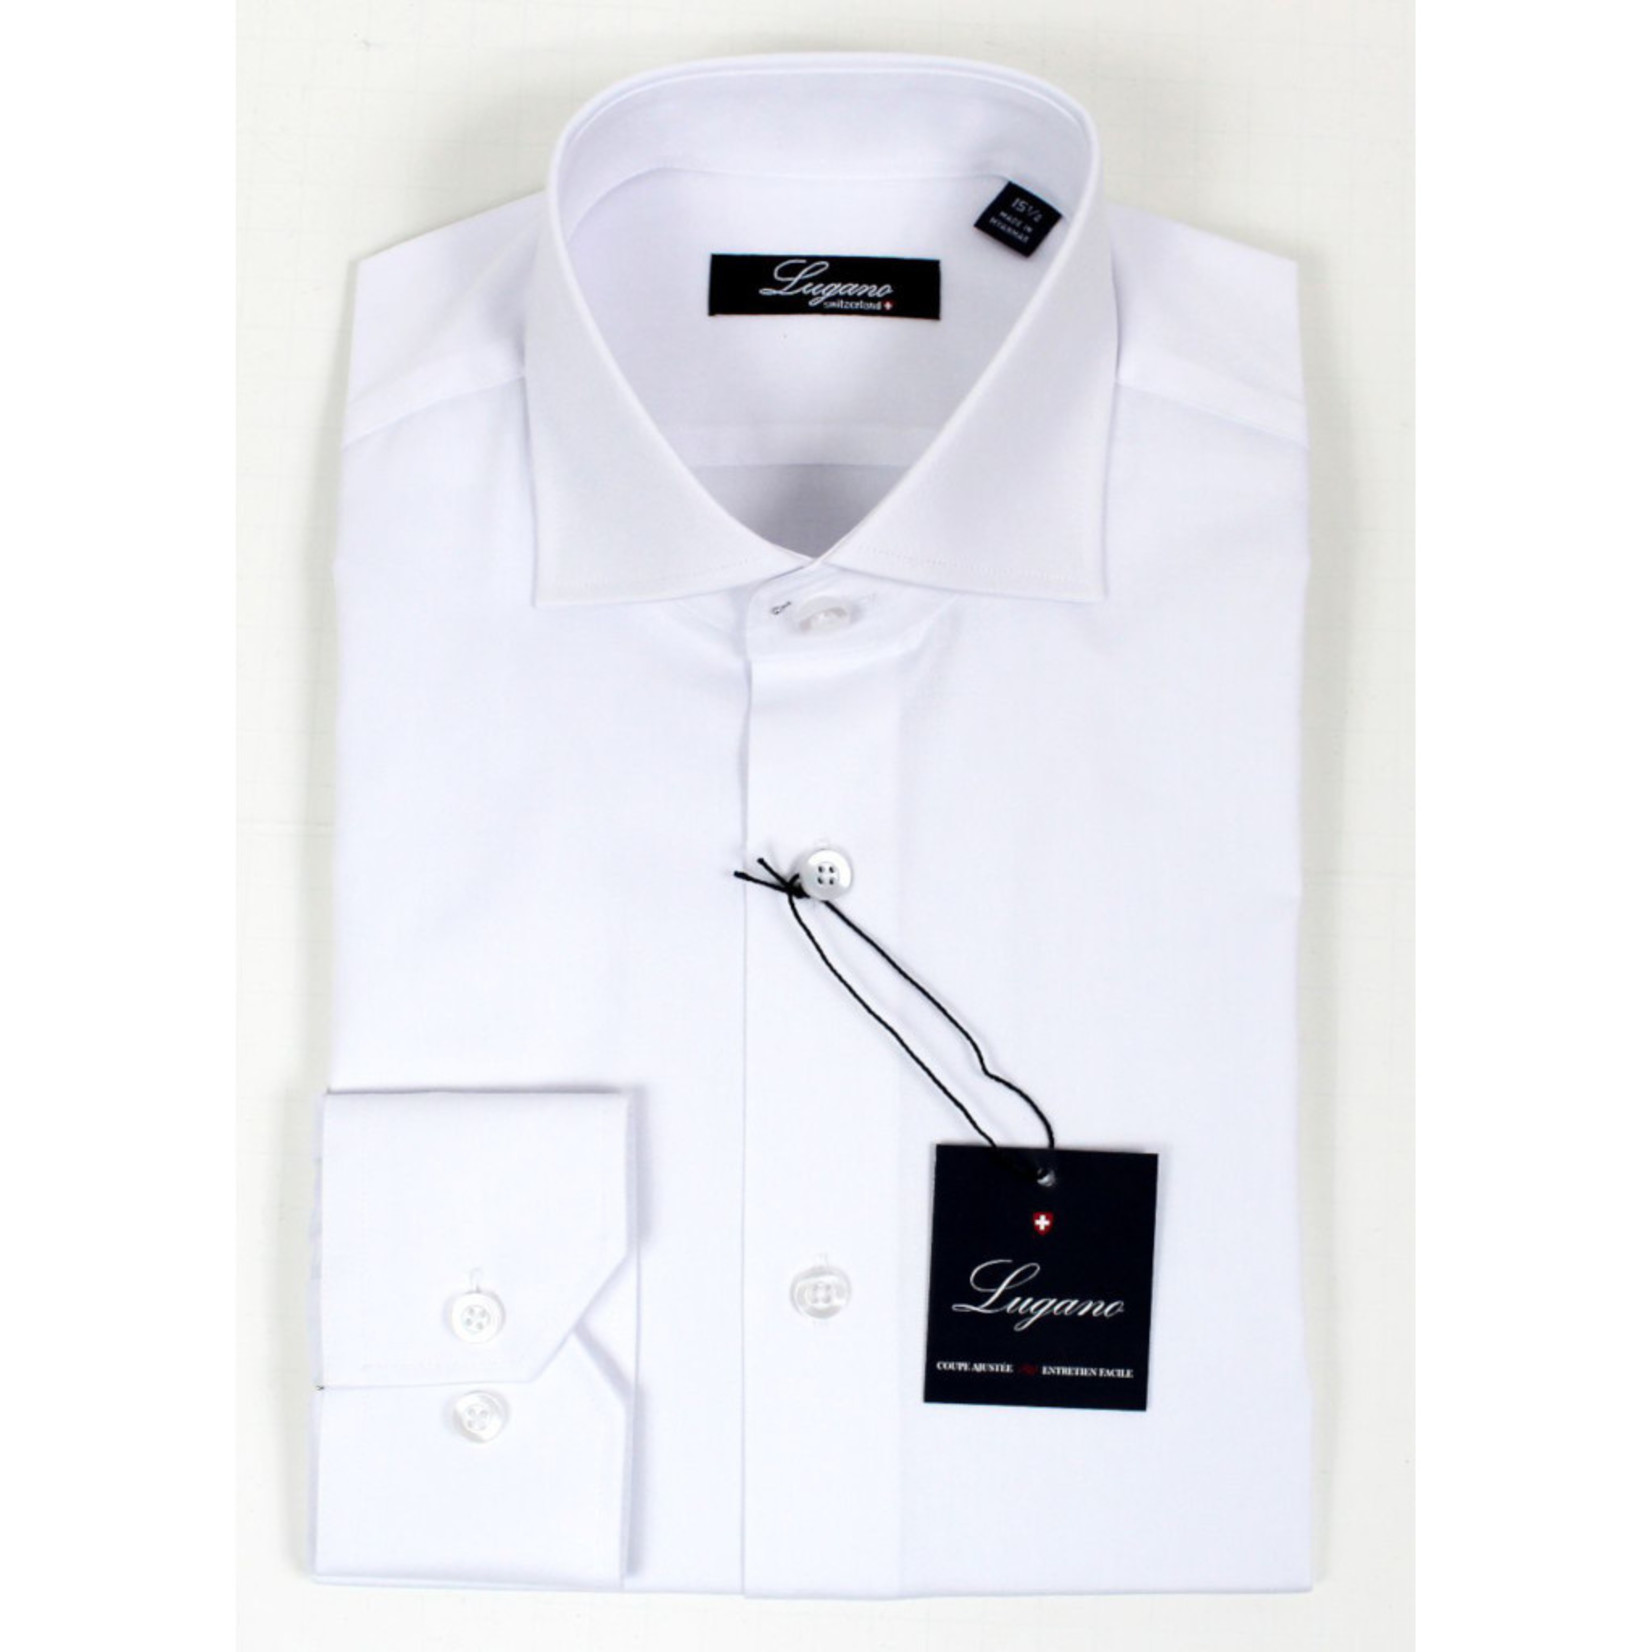 Lugano LG-200 Slim Fit Dress Shirt